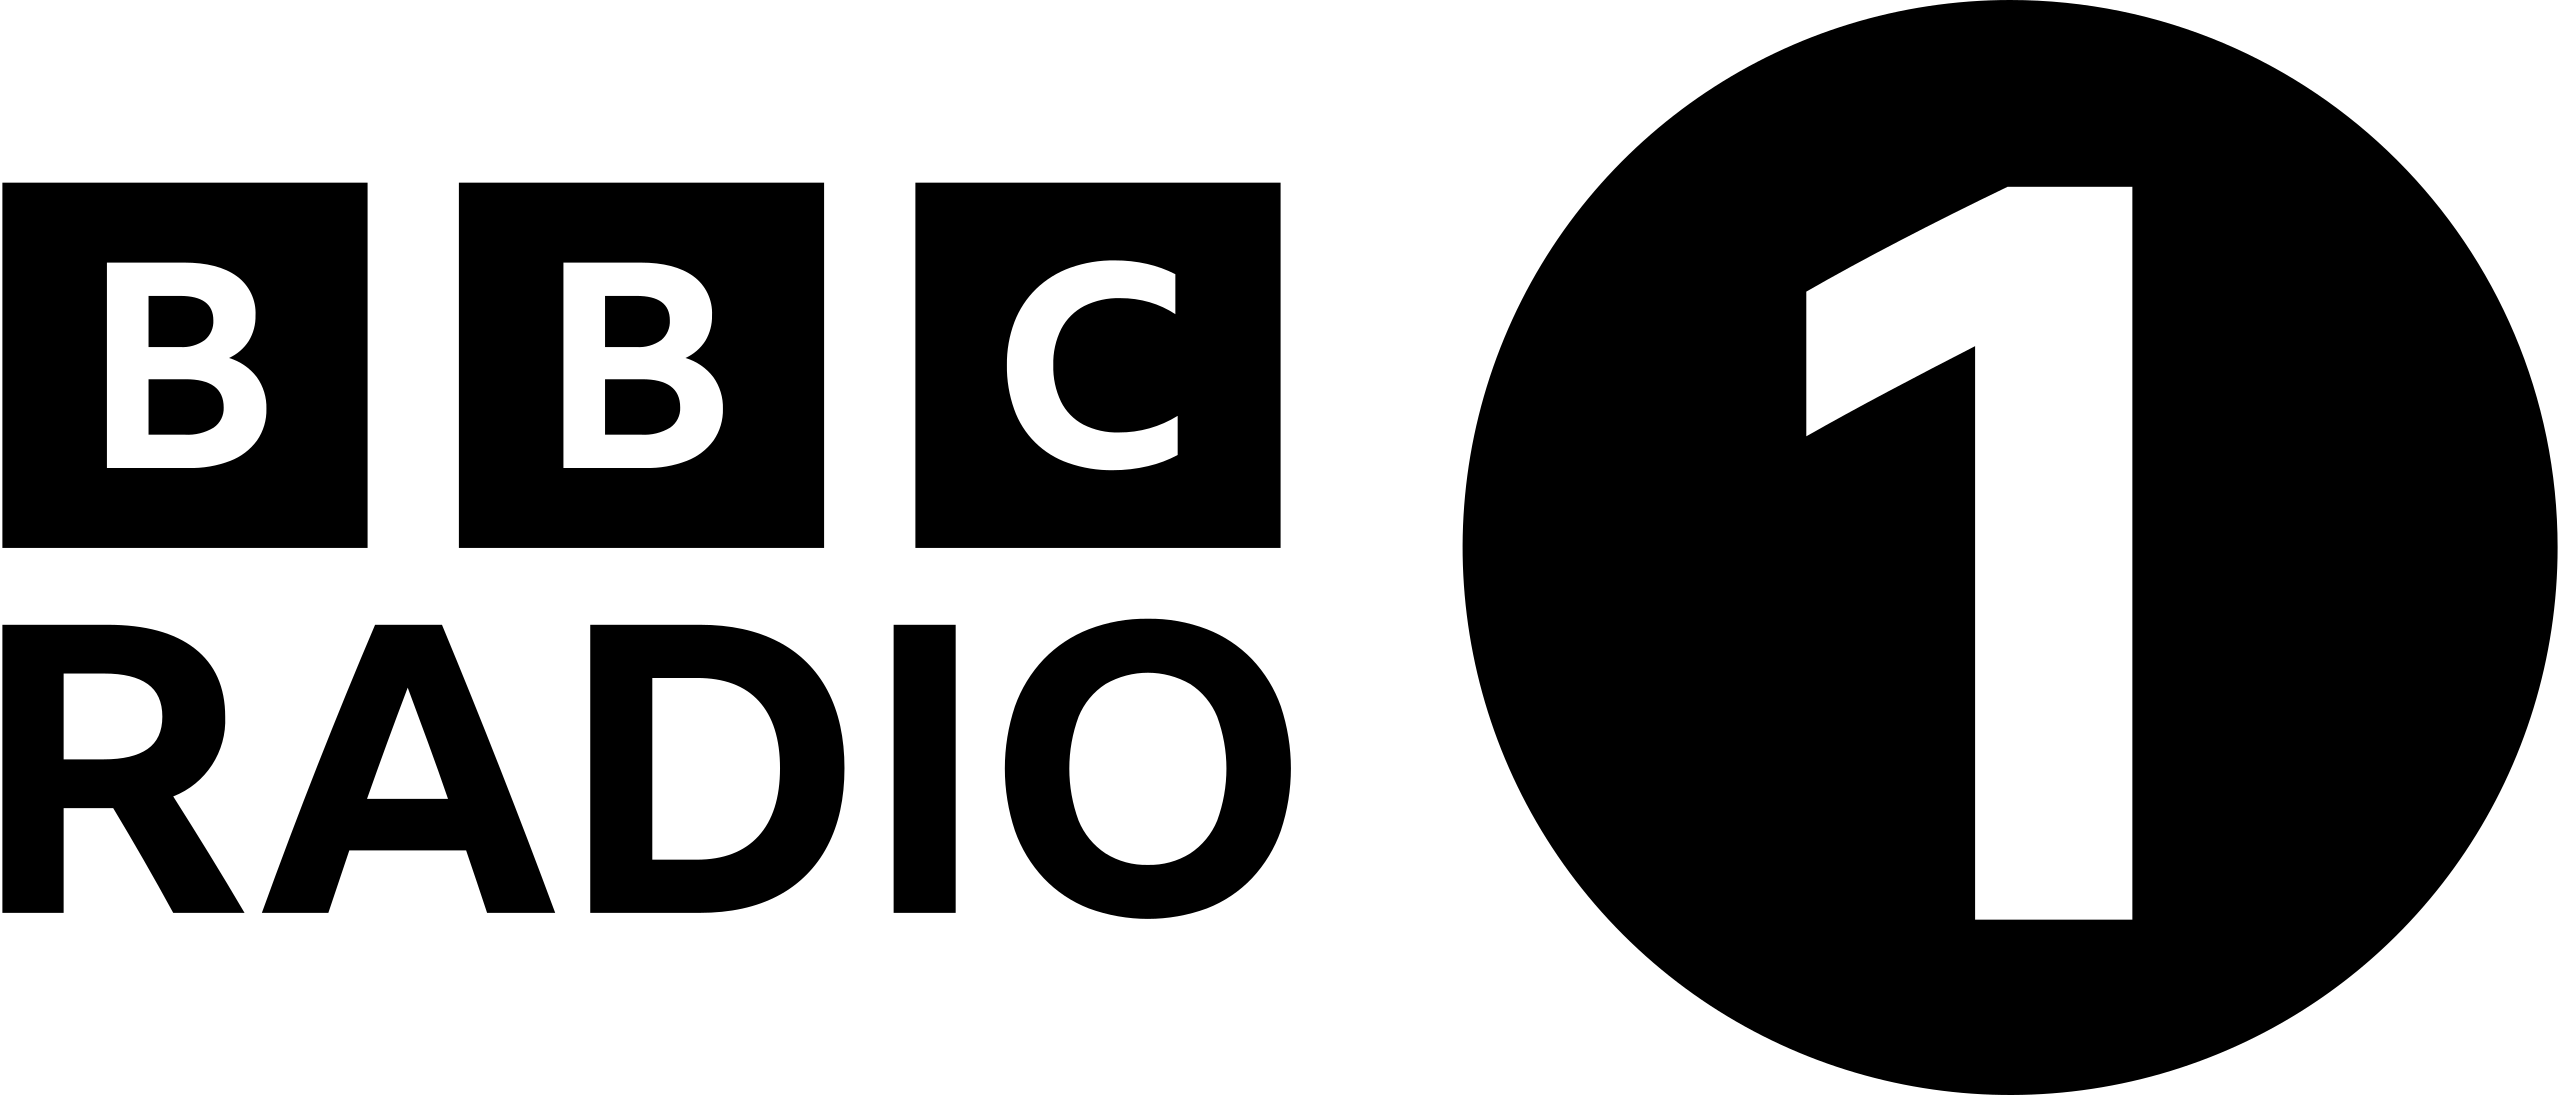 BBC radio 1 logo.png